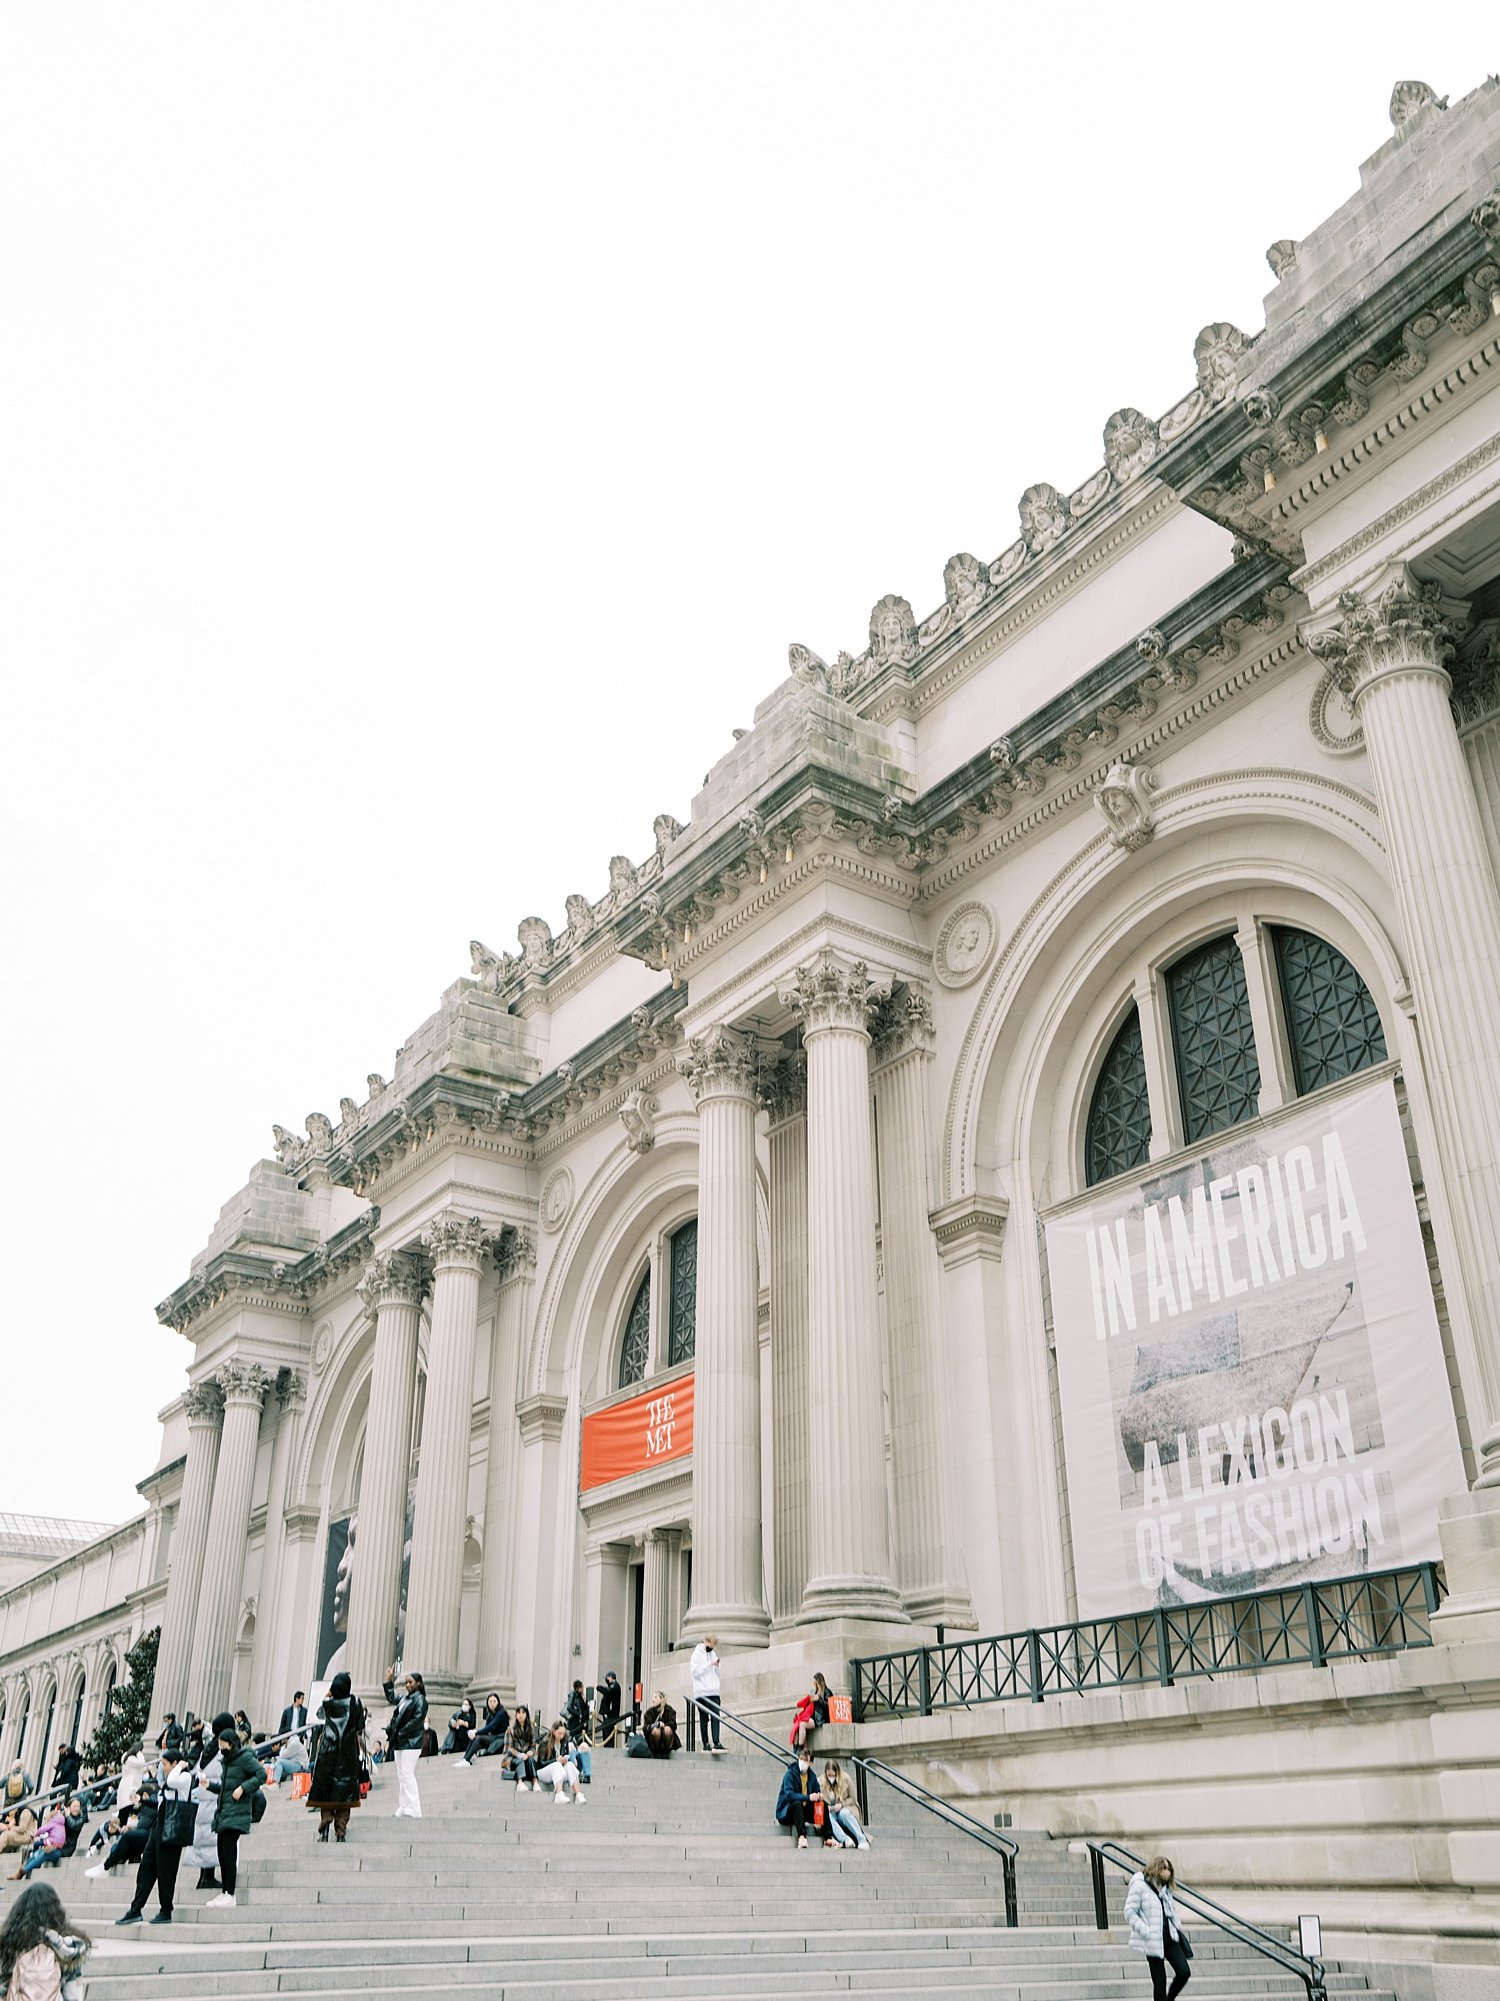 the Metropolitan Museum of Art in New York City